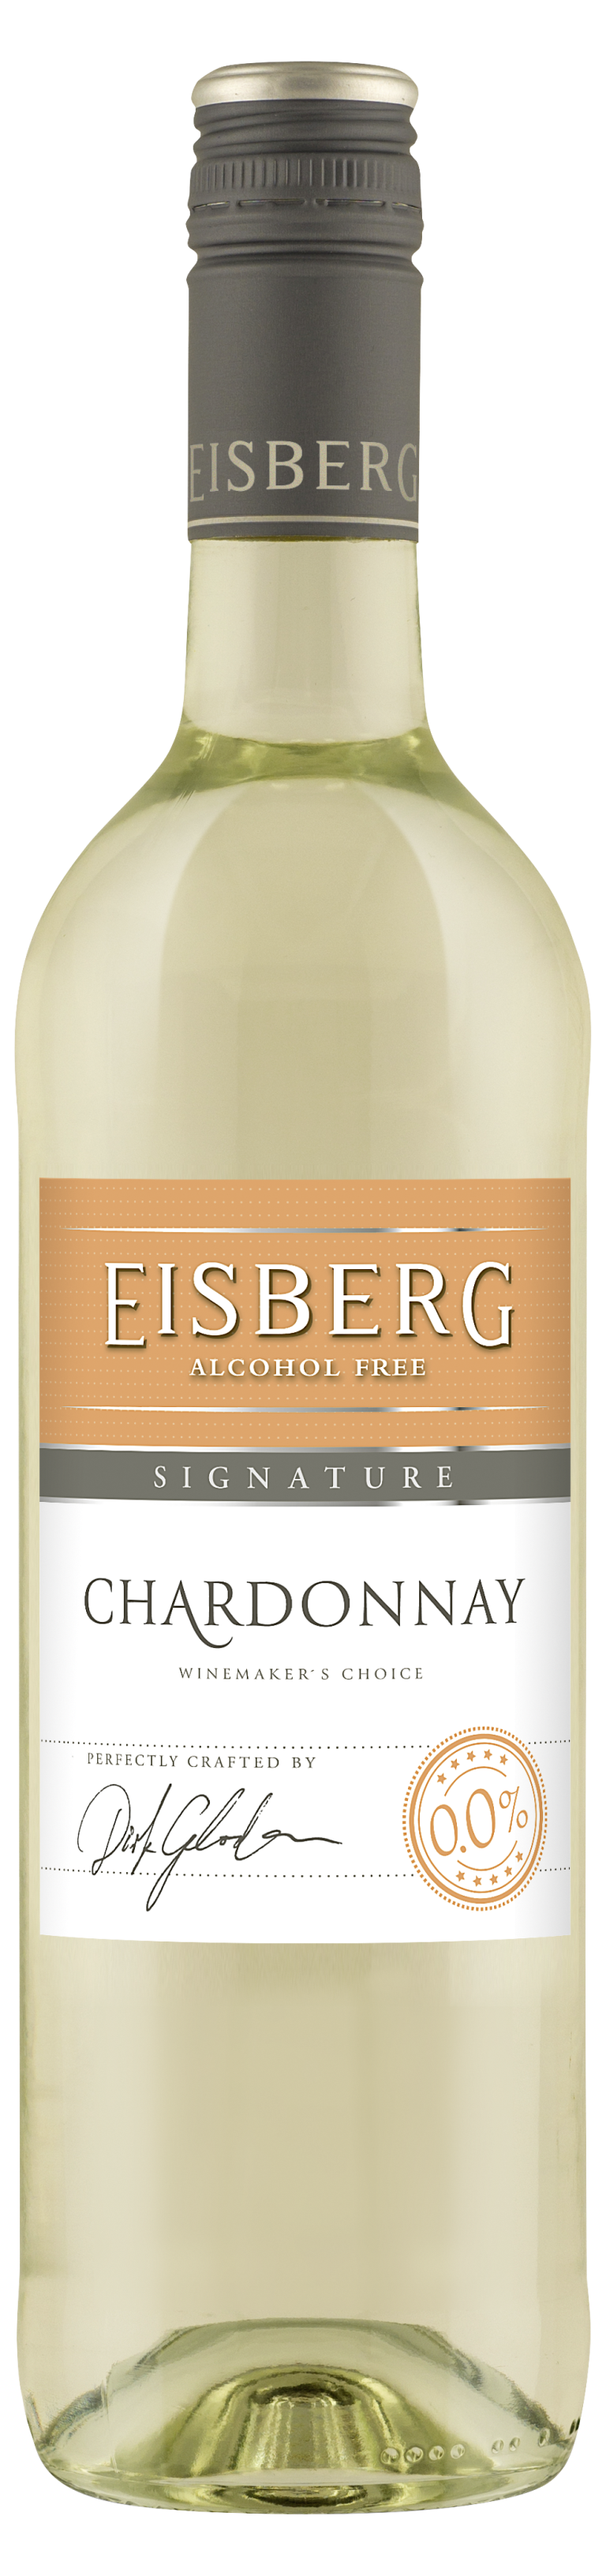 Eisberg alcohol-free wine announces major rebranding